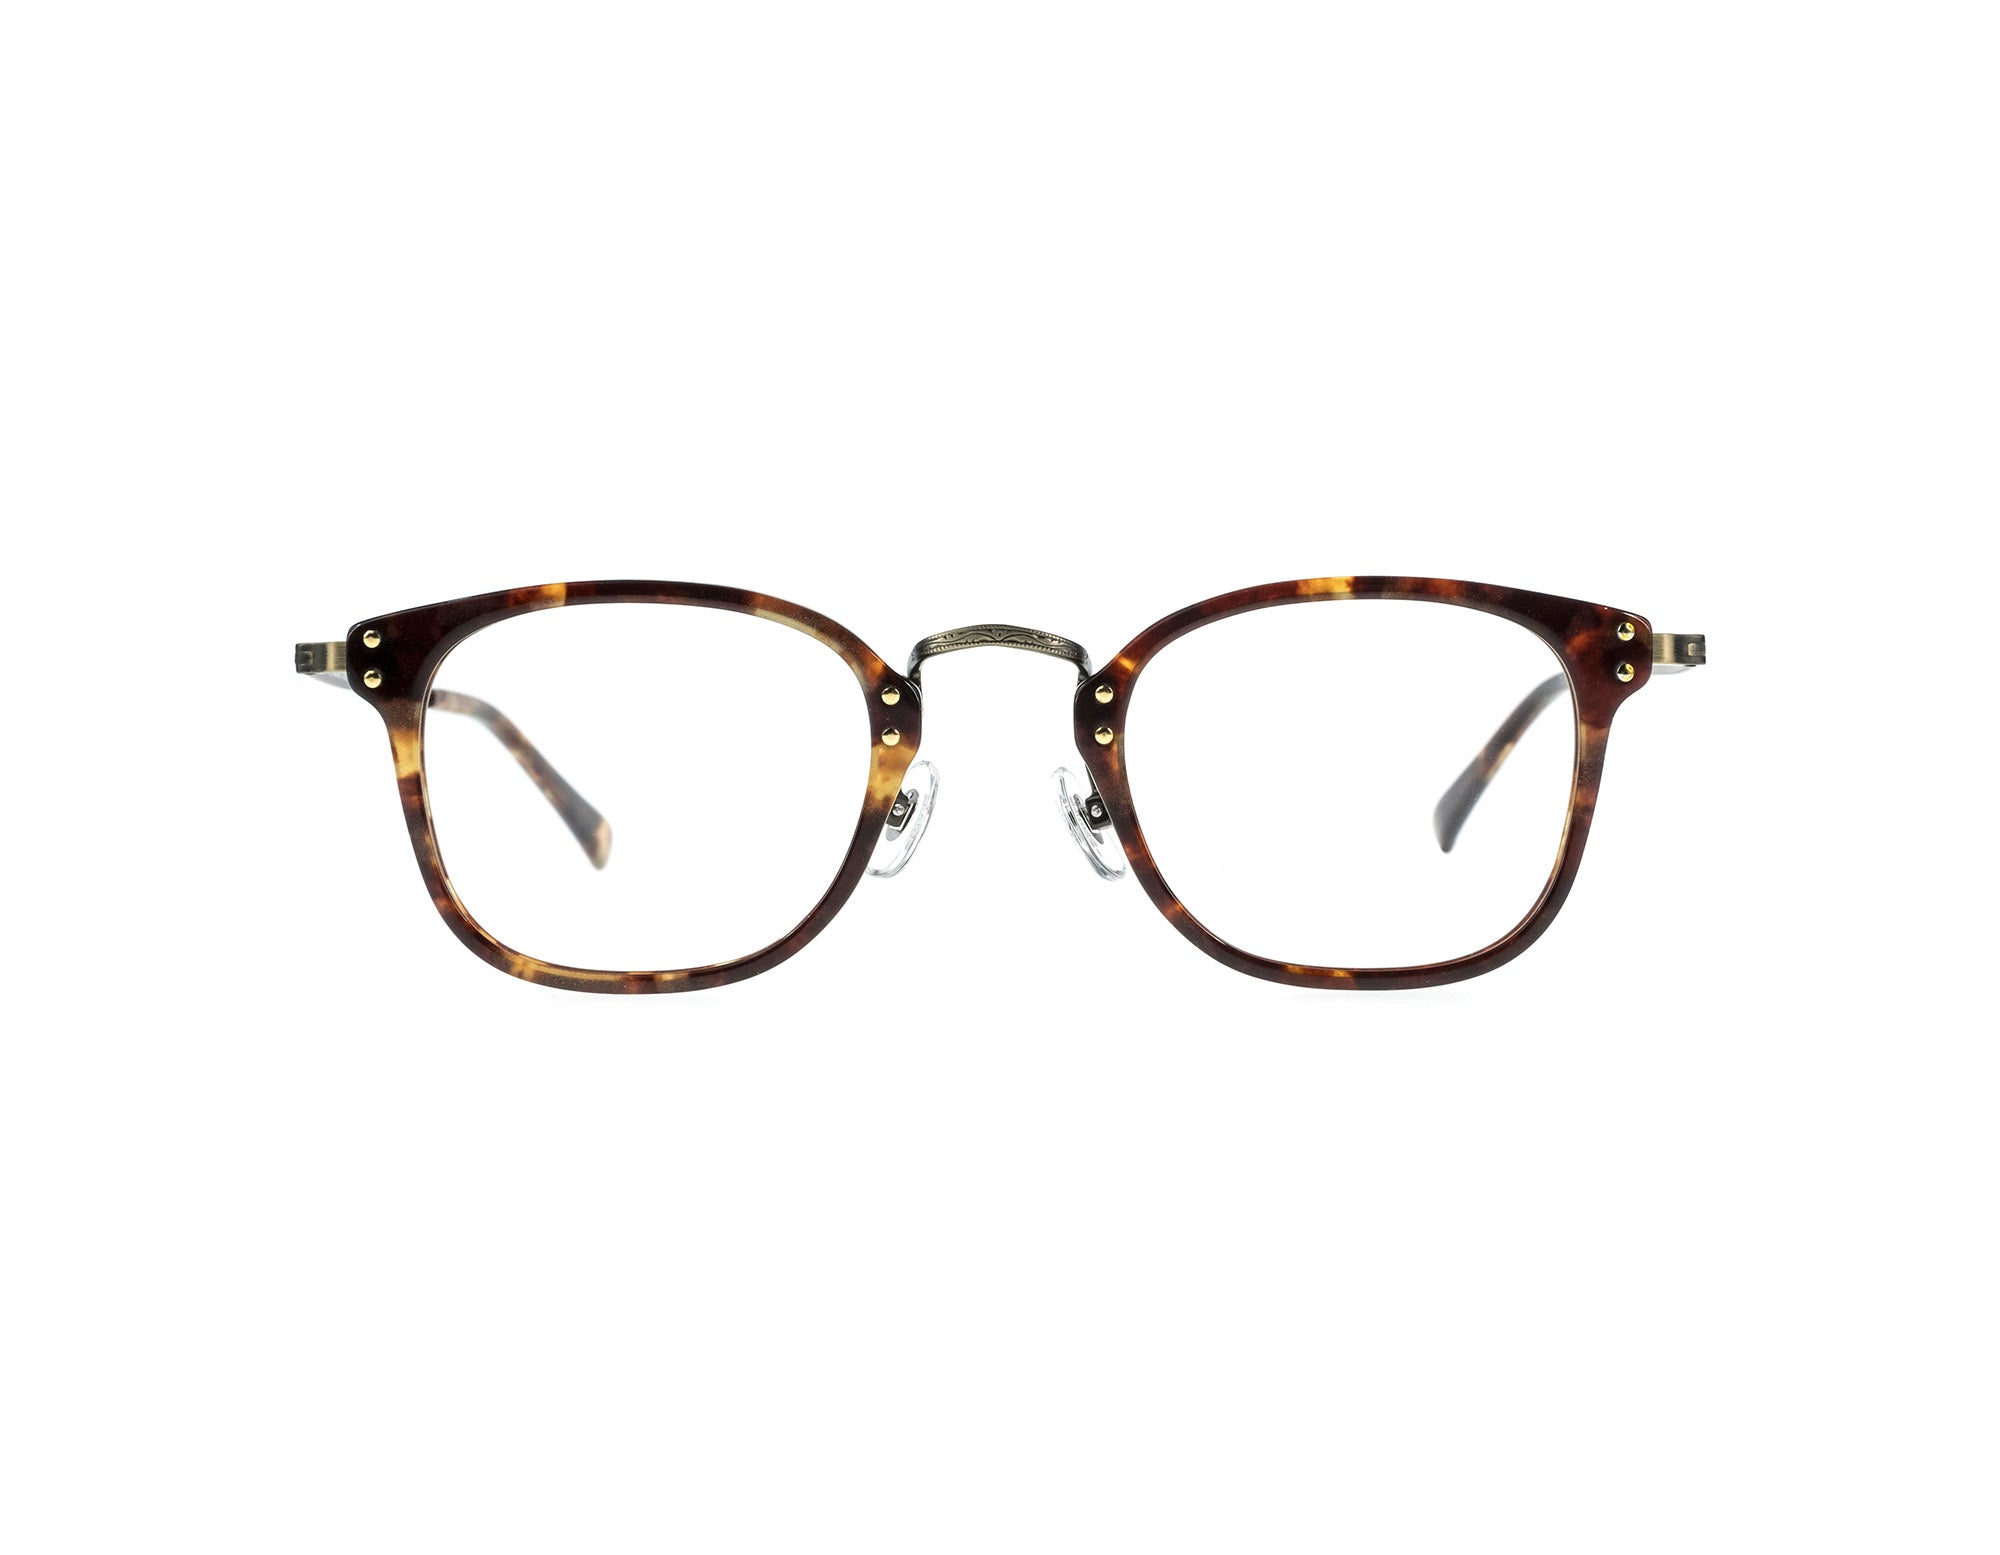 Oh My Glasses - Ivy omg-080-3